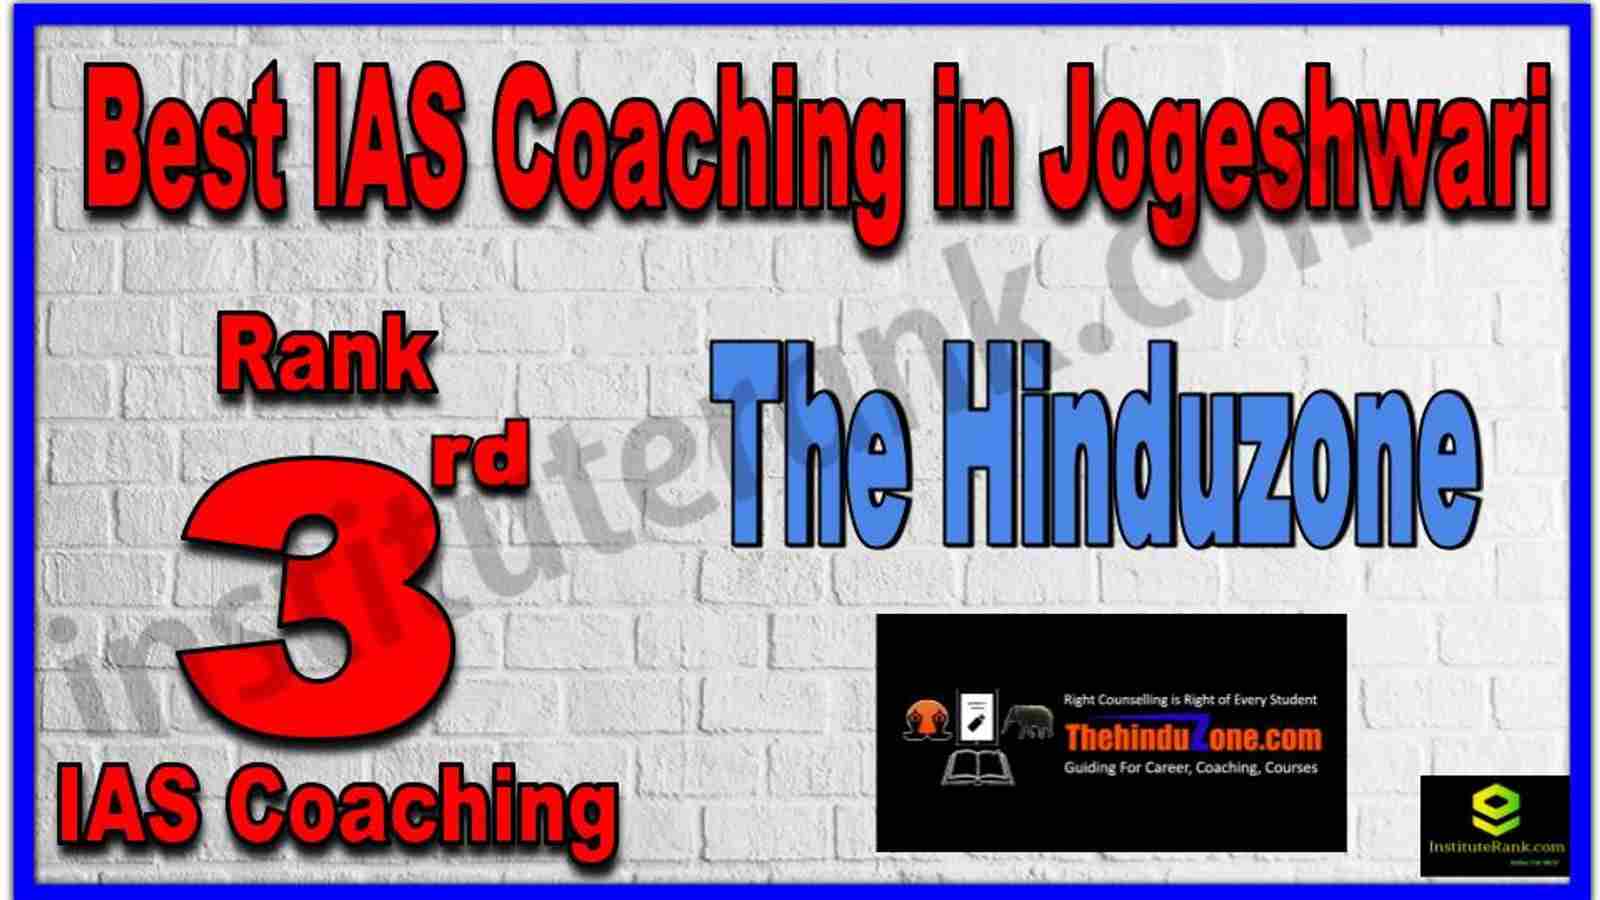 Rank 3rd Best IAS Coaching in Jogeshwari